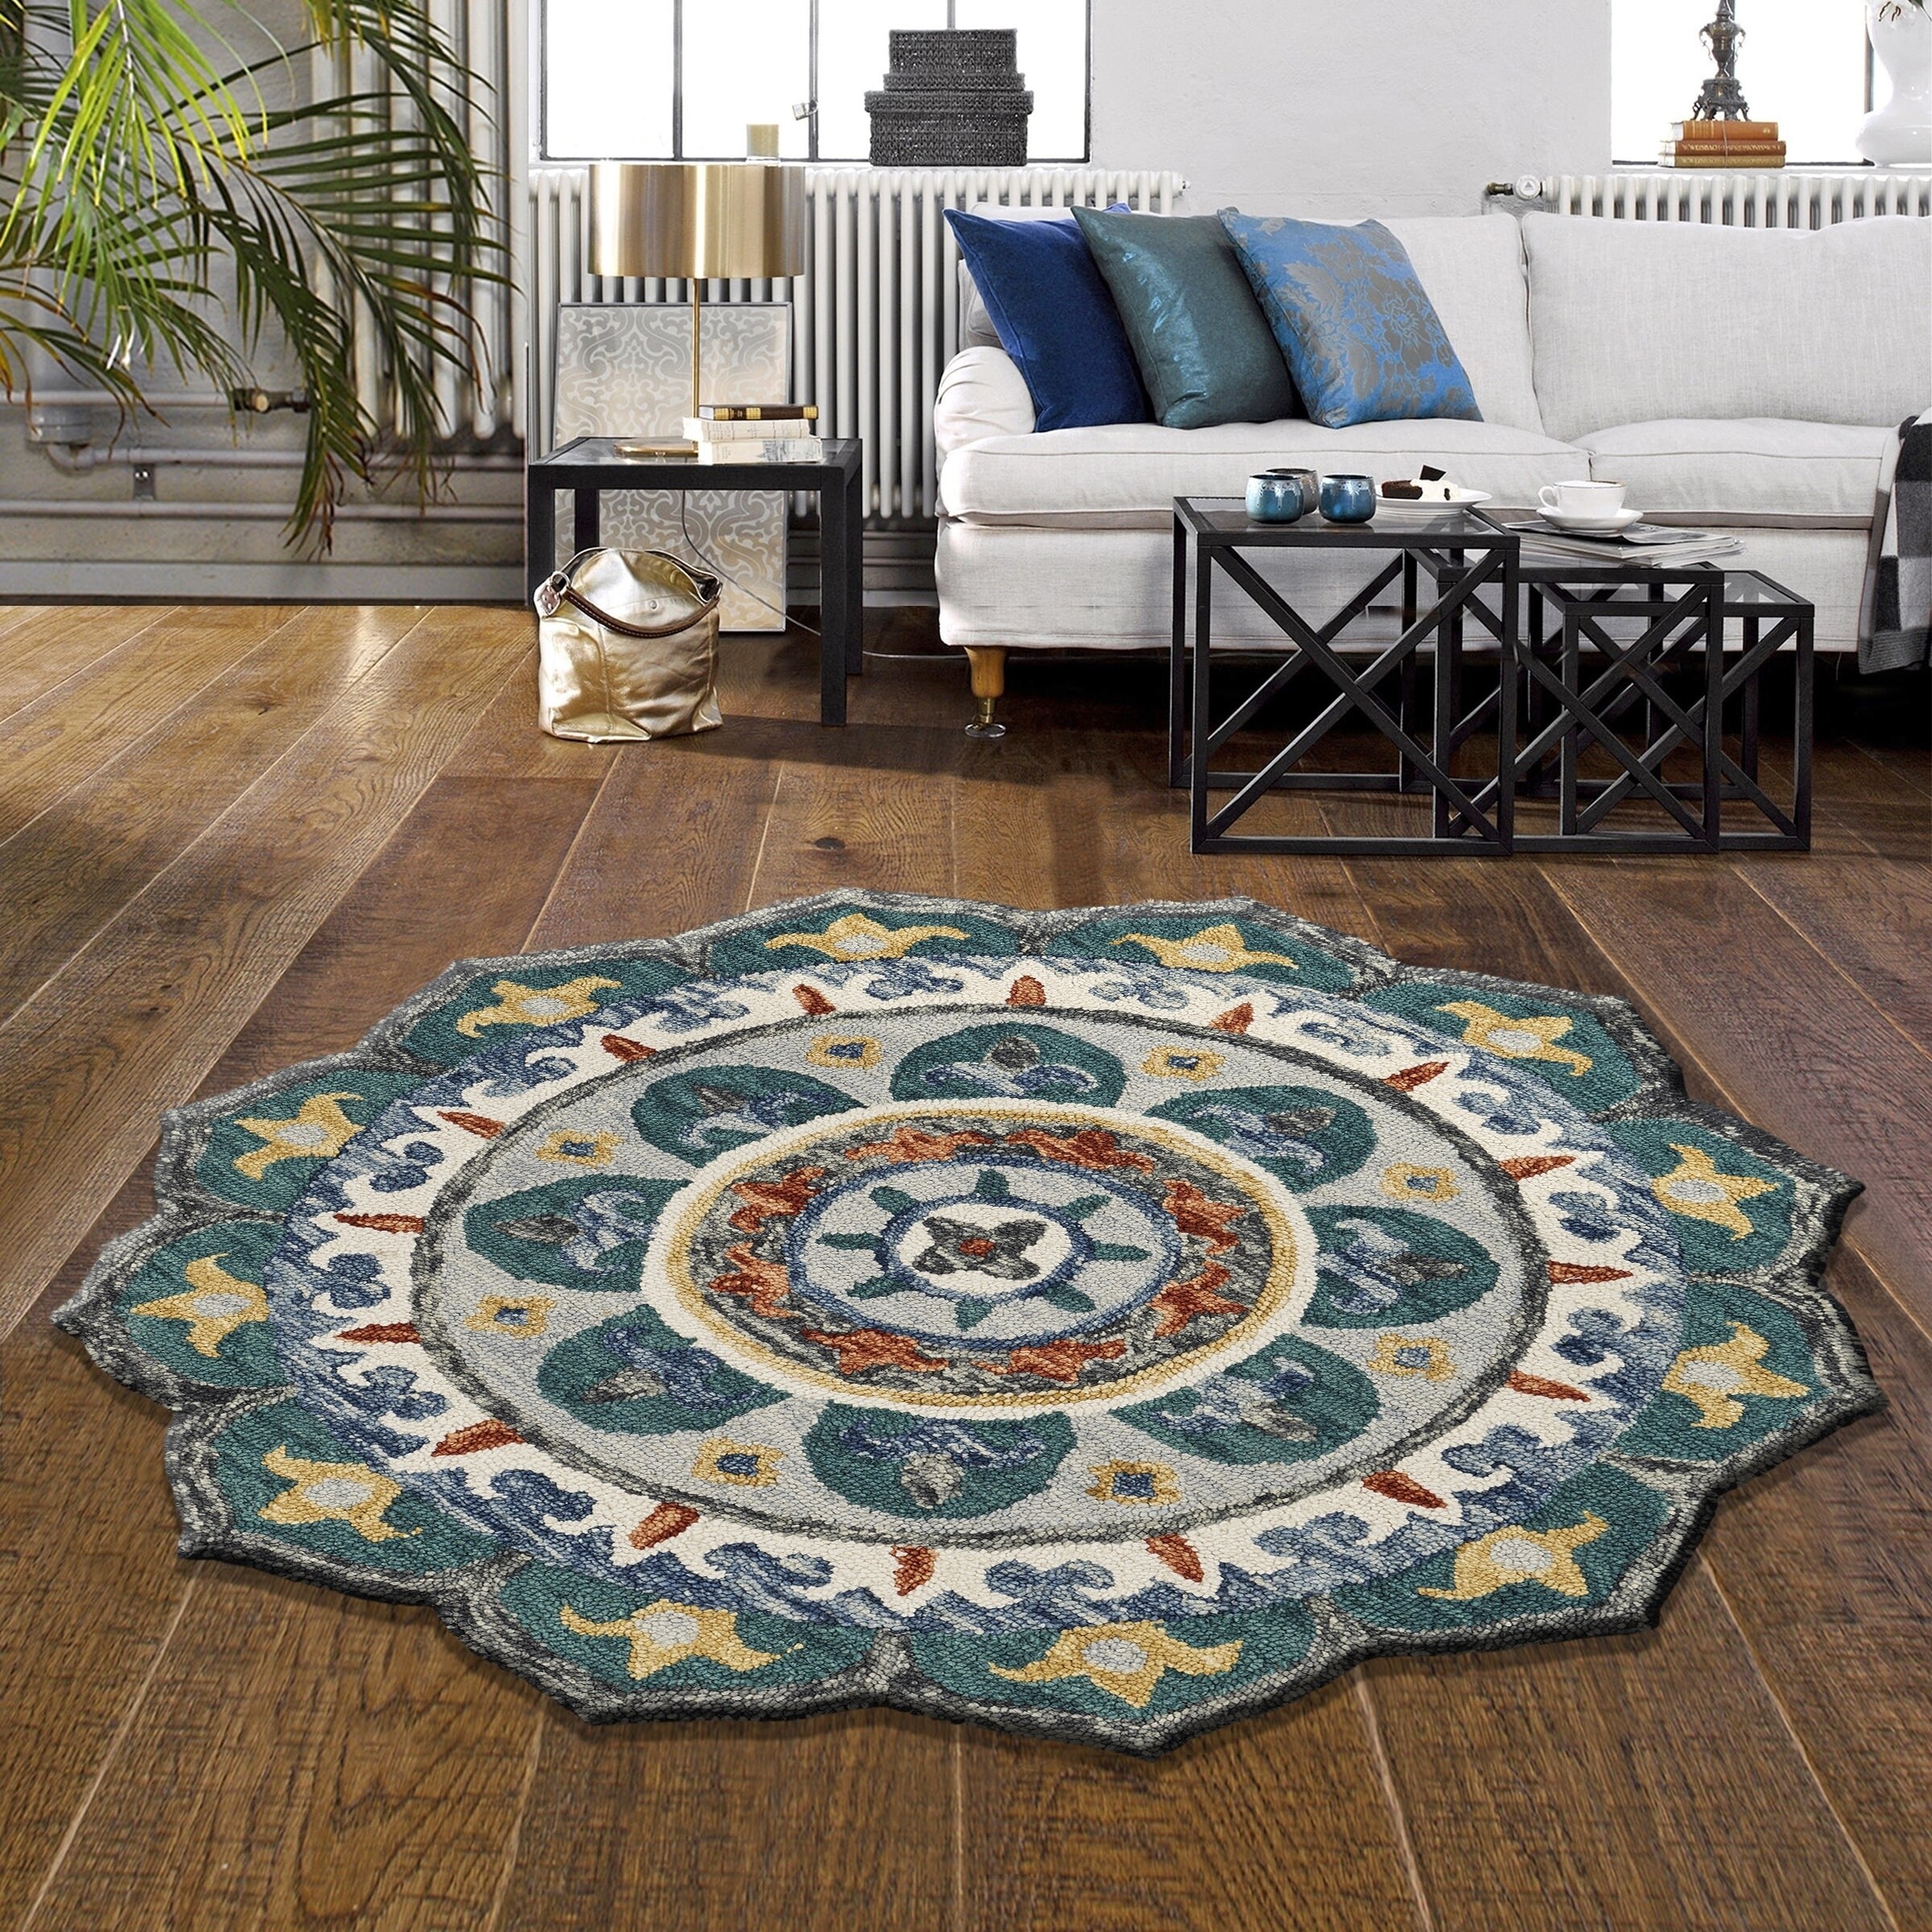 Round Floor Mat Bedroom Carpet Living Room Area Rugs Abstract Mandala Flower 